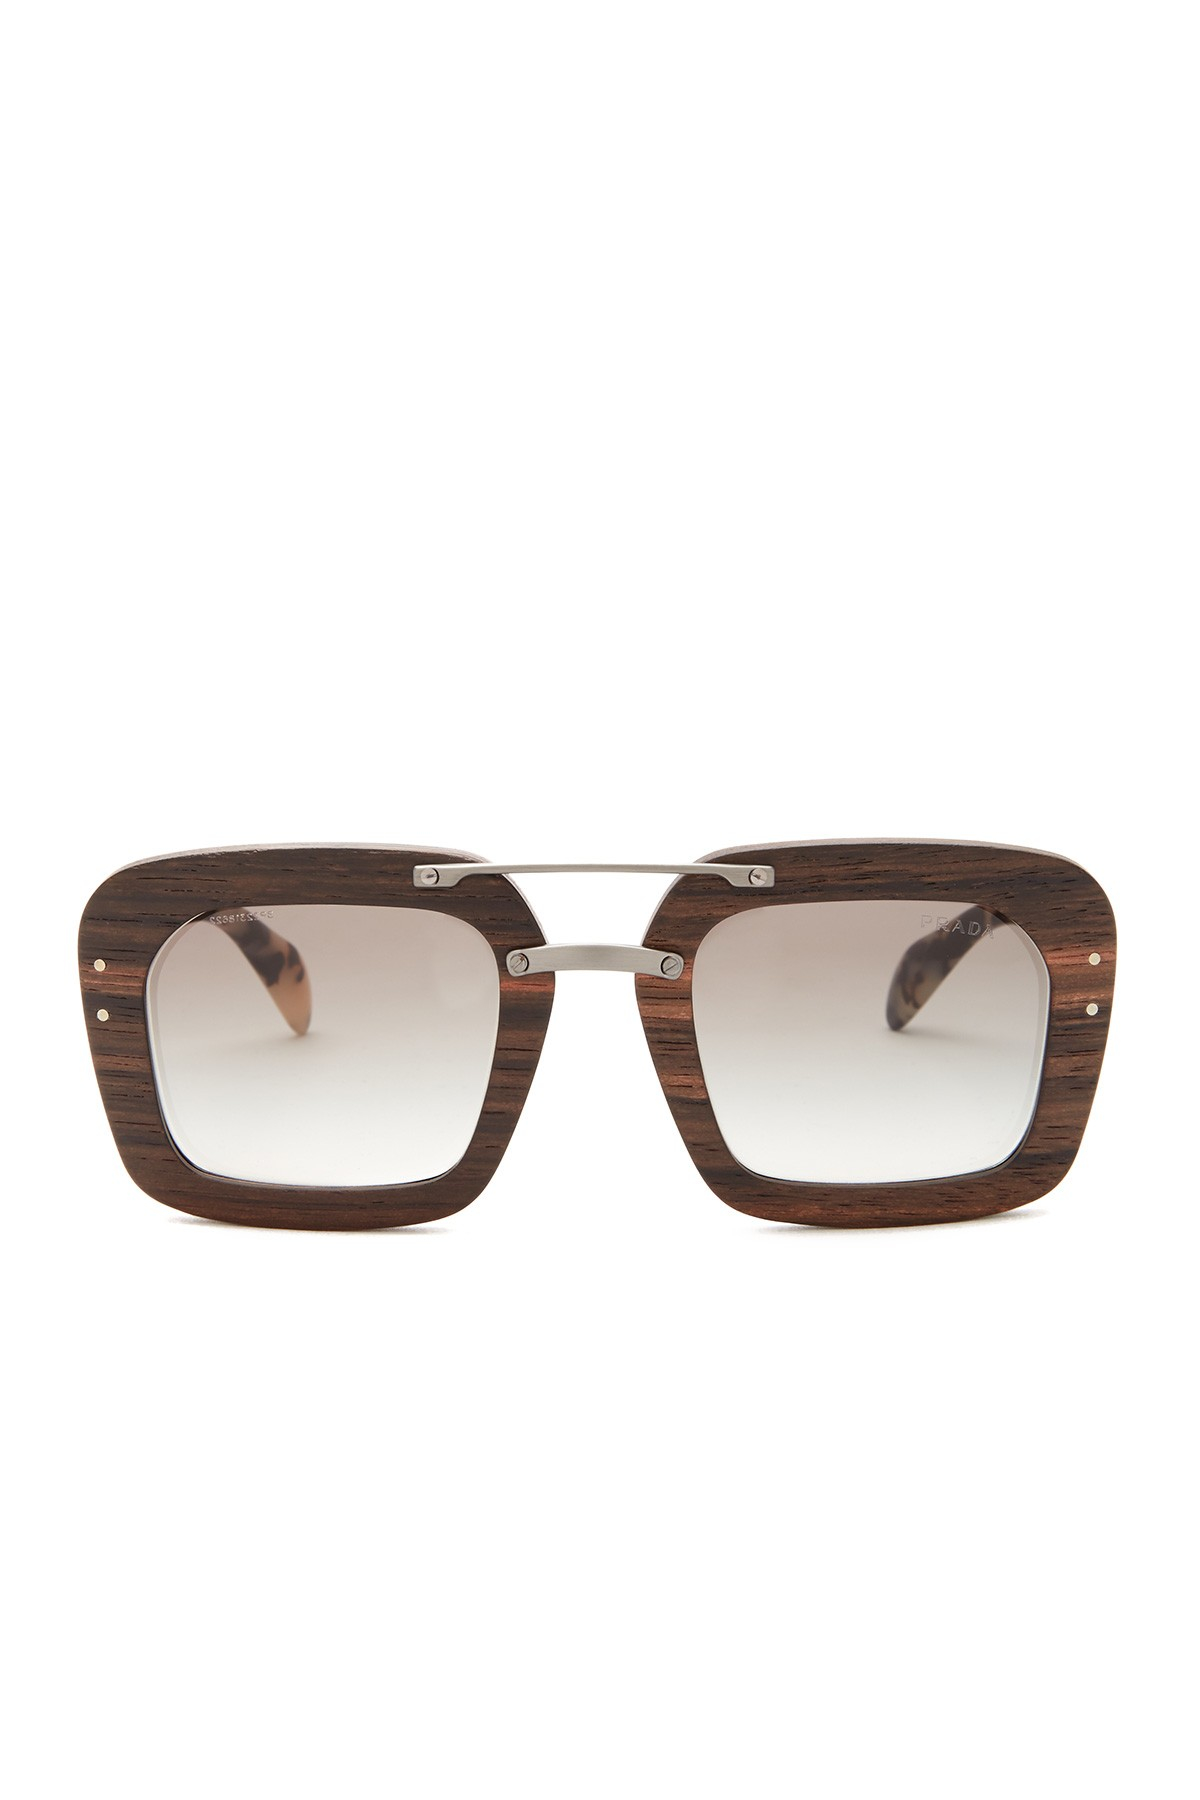 prada wood frame eyeglasses